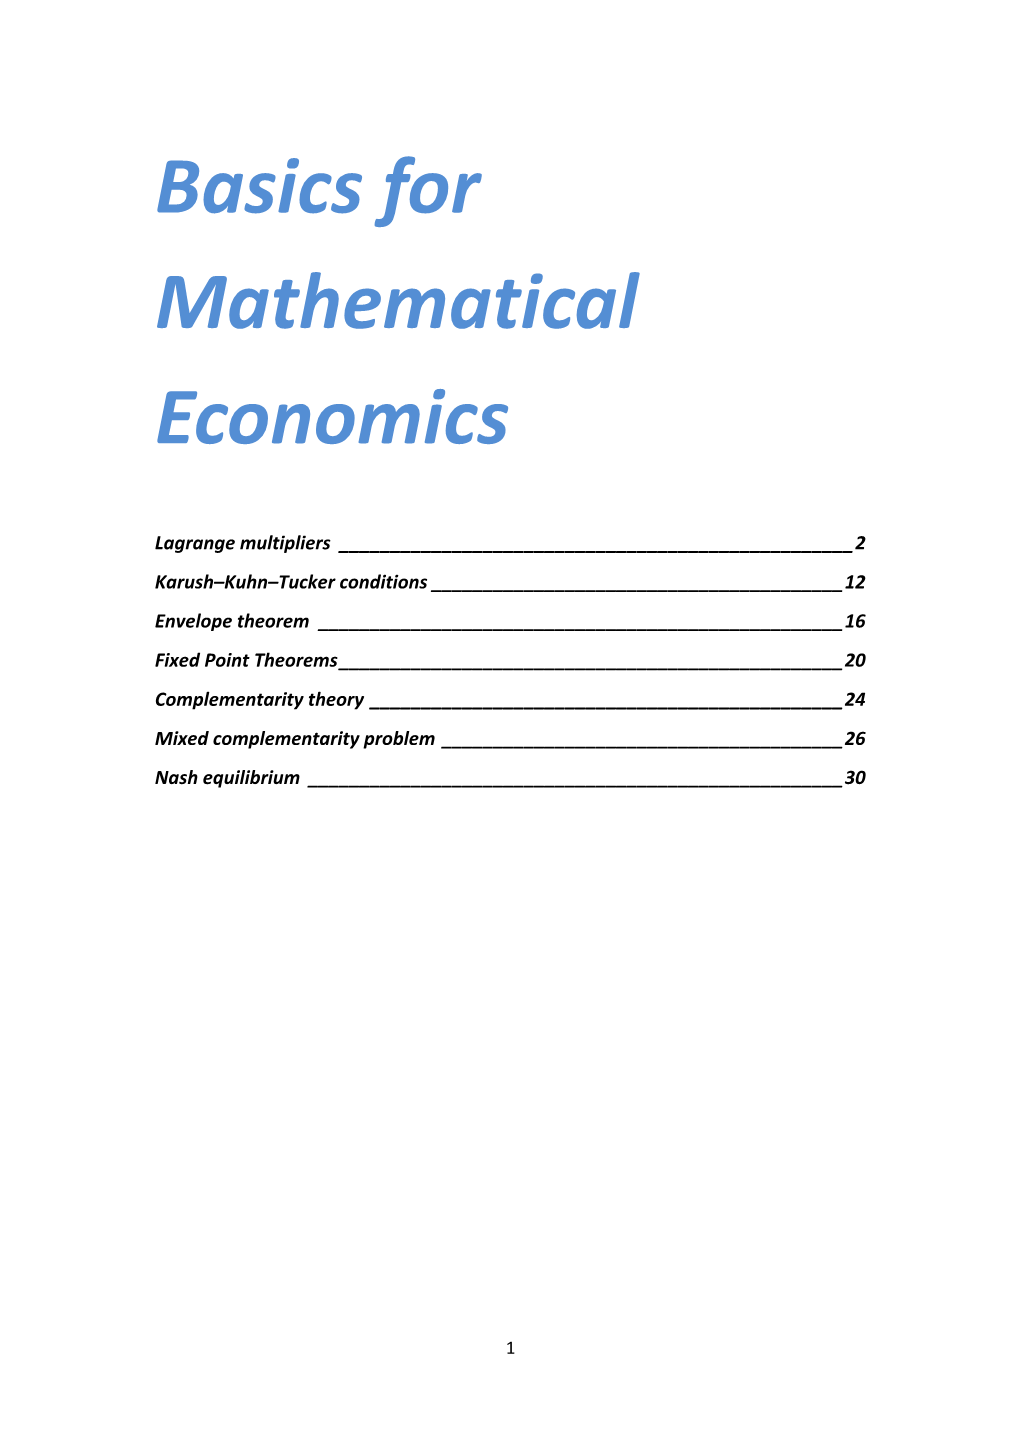 Basics for Mathematical Economics